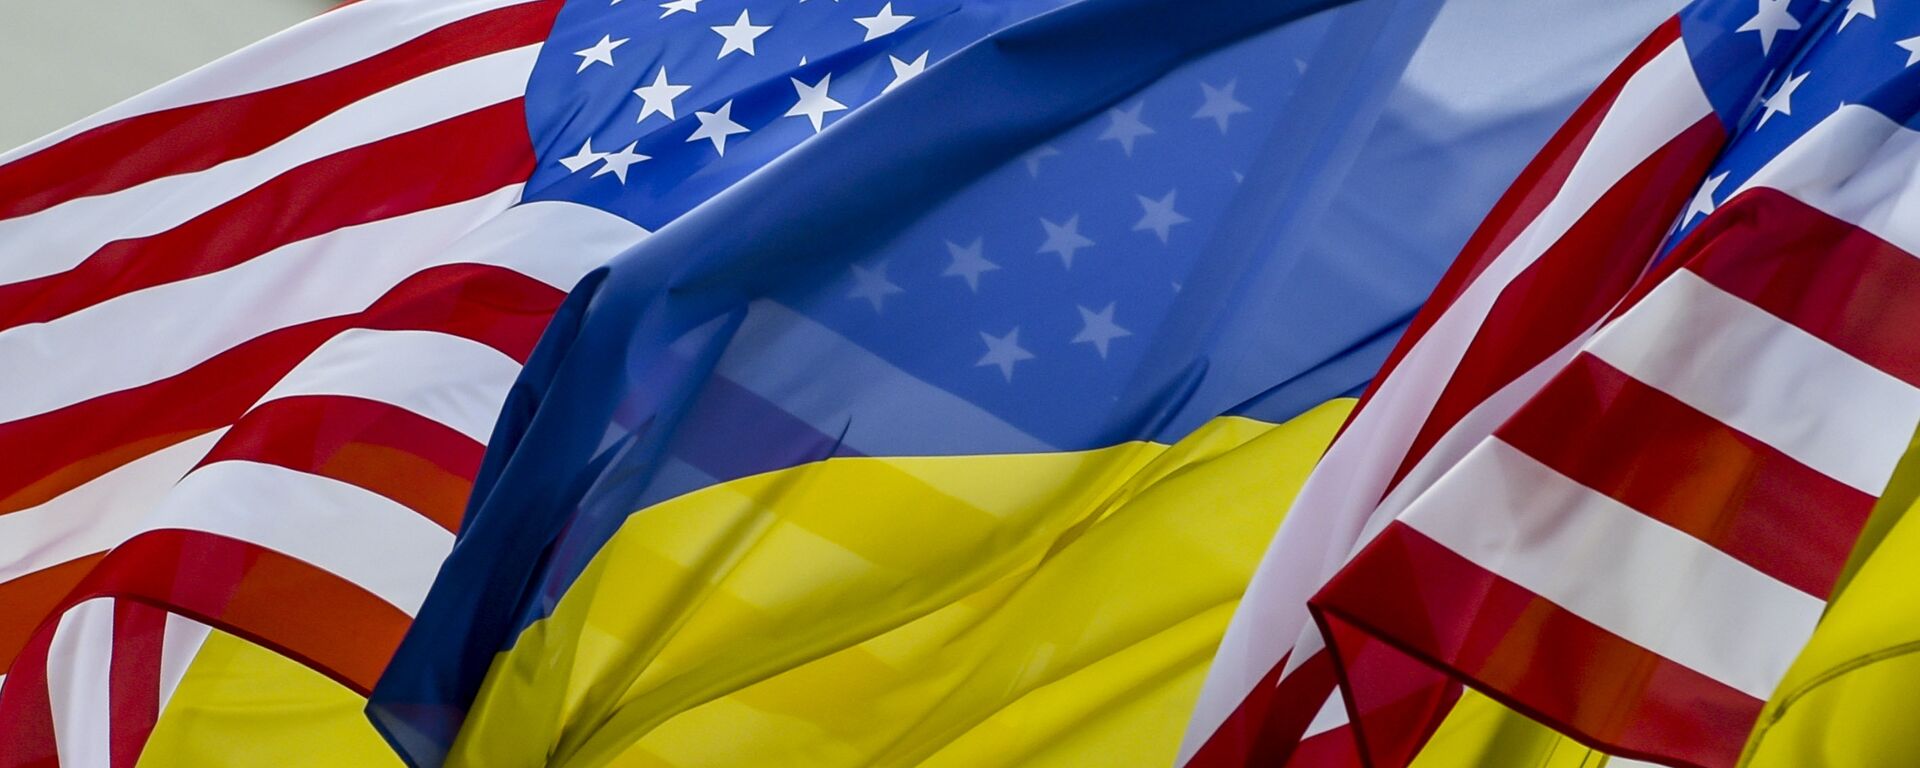 Флаги США и Украины - Sputnik Latvija, 1920, 17.11.2021